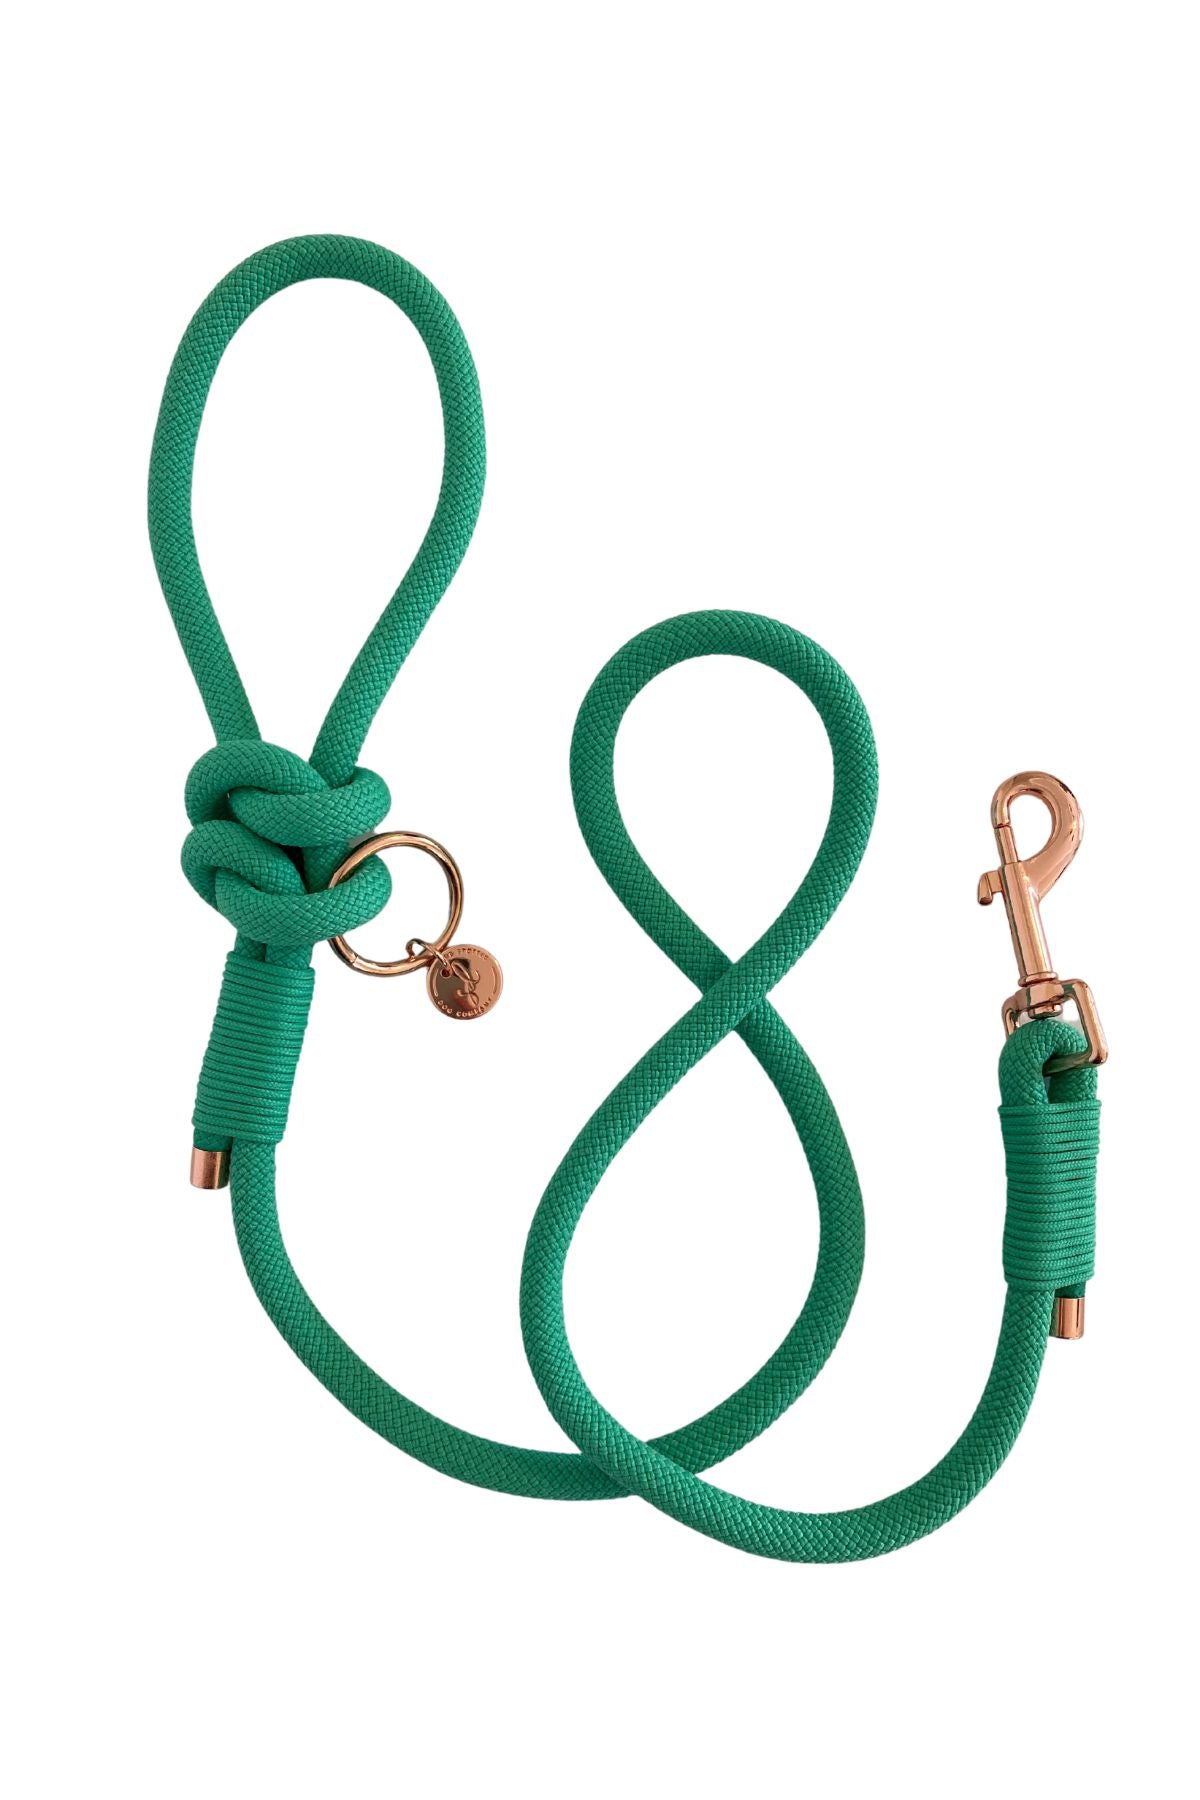 Rope Leash - Vibrant Green